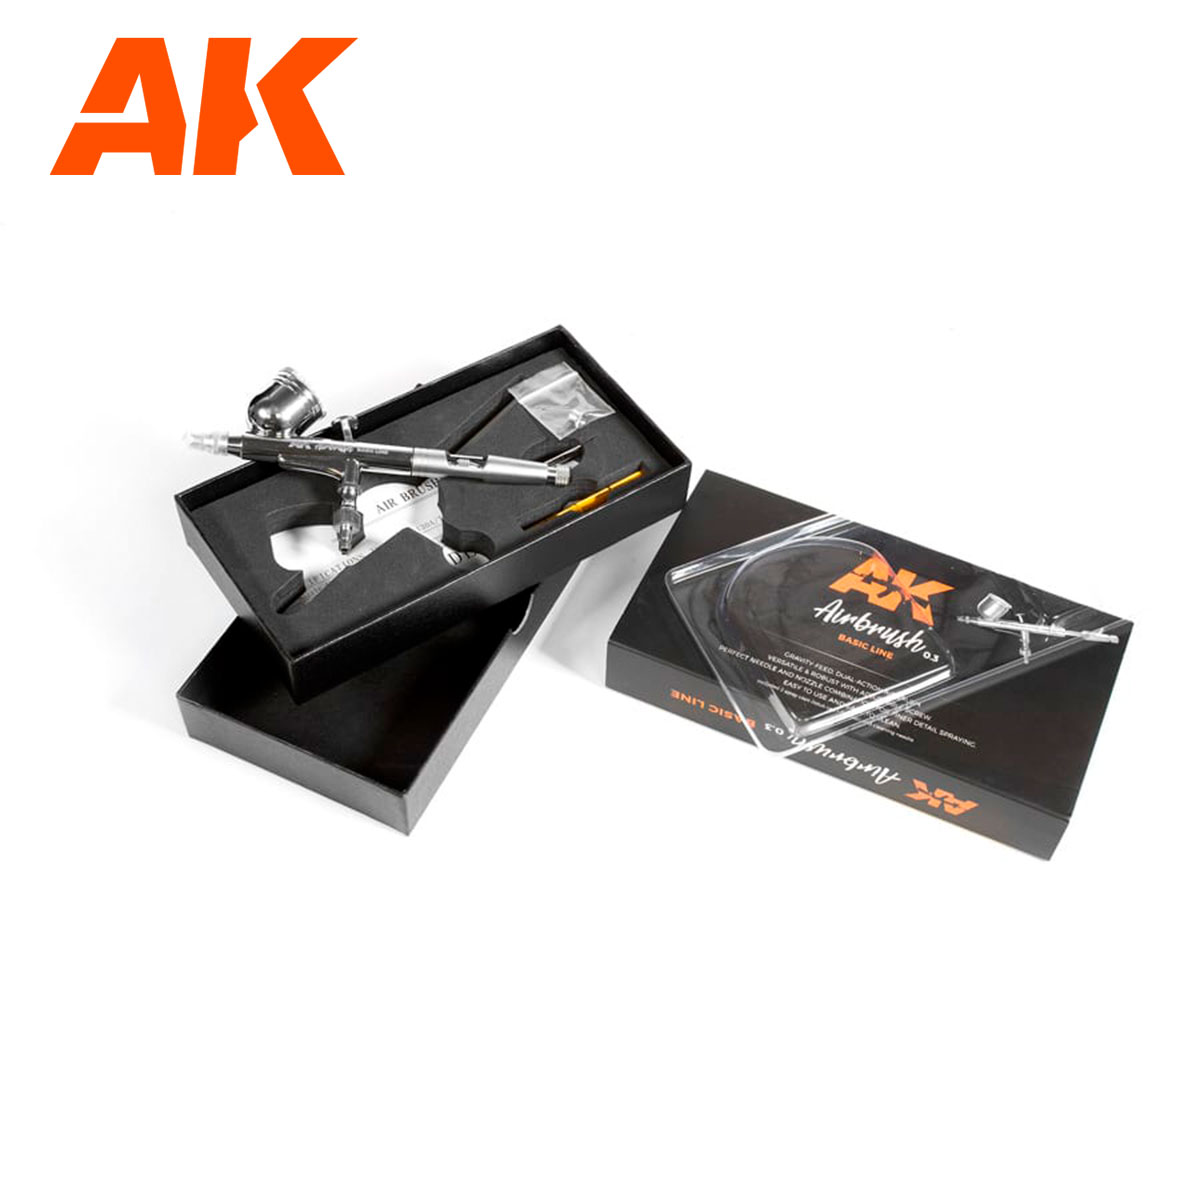 Buy AK AIRBRUSH - BASIC LINE 0.3 online for44,95€ | AK-Interactive